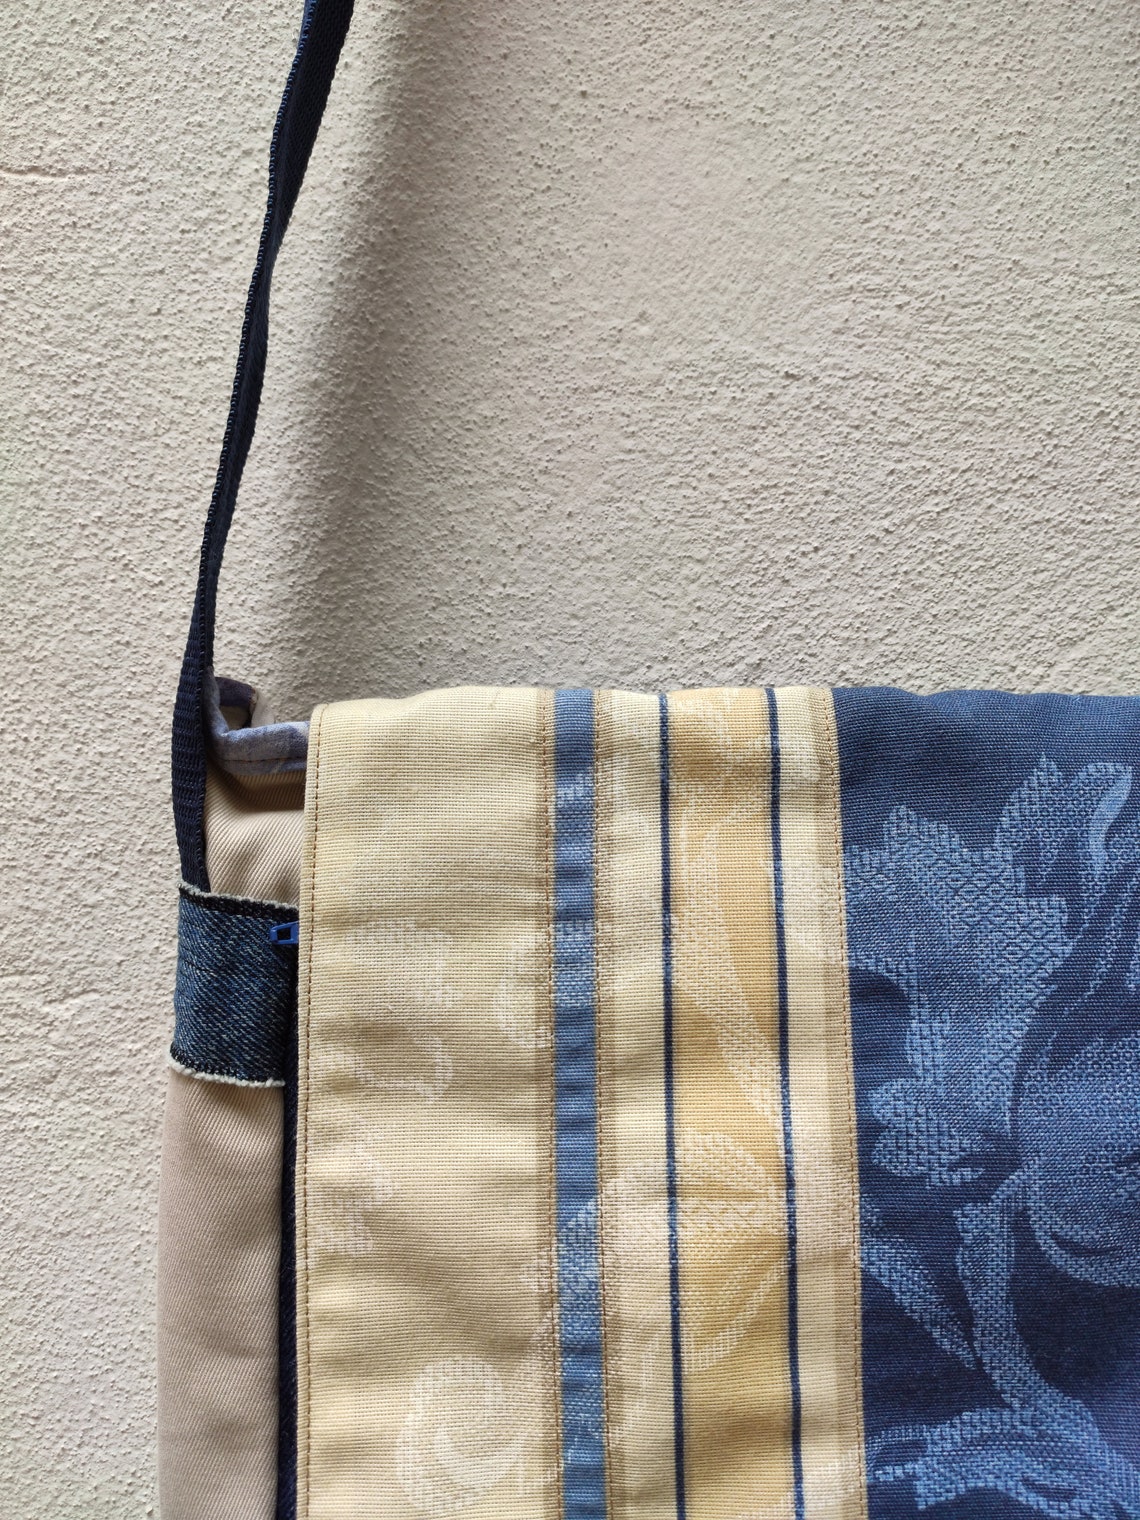 Shoulder flap bag with Velcro closure | Etsy